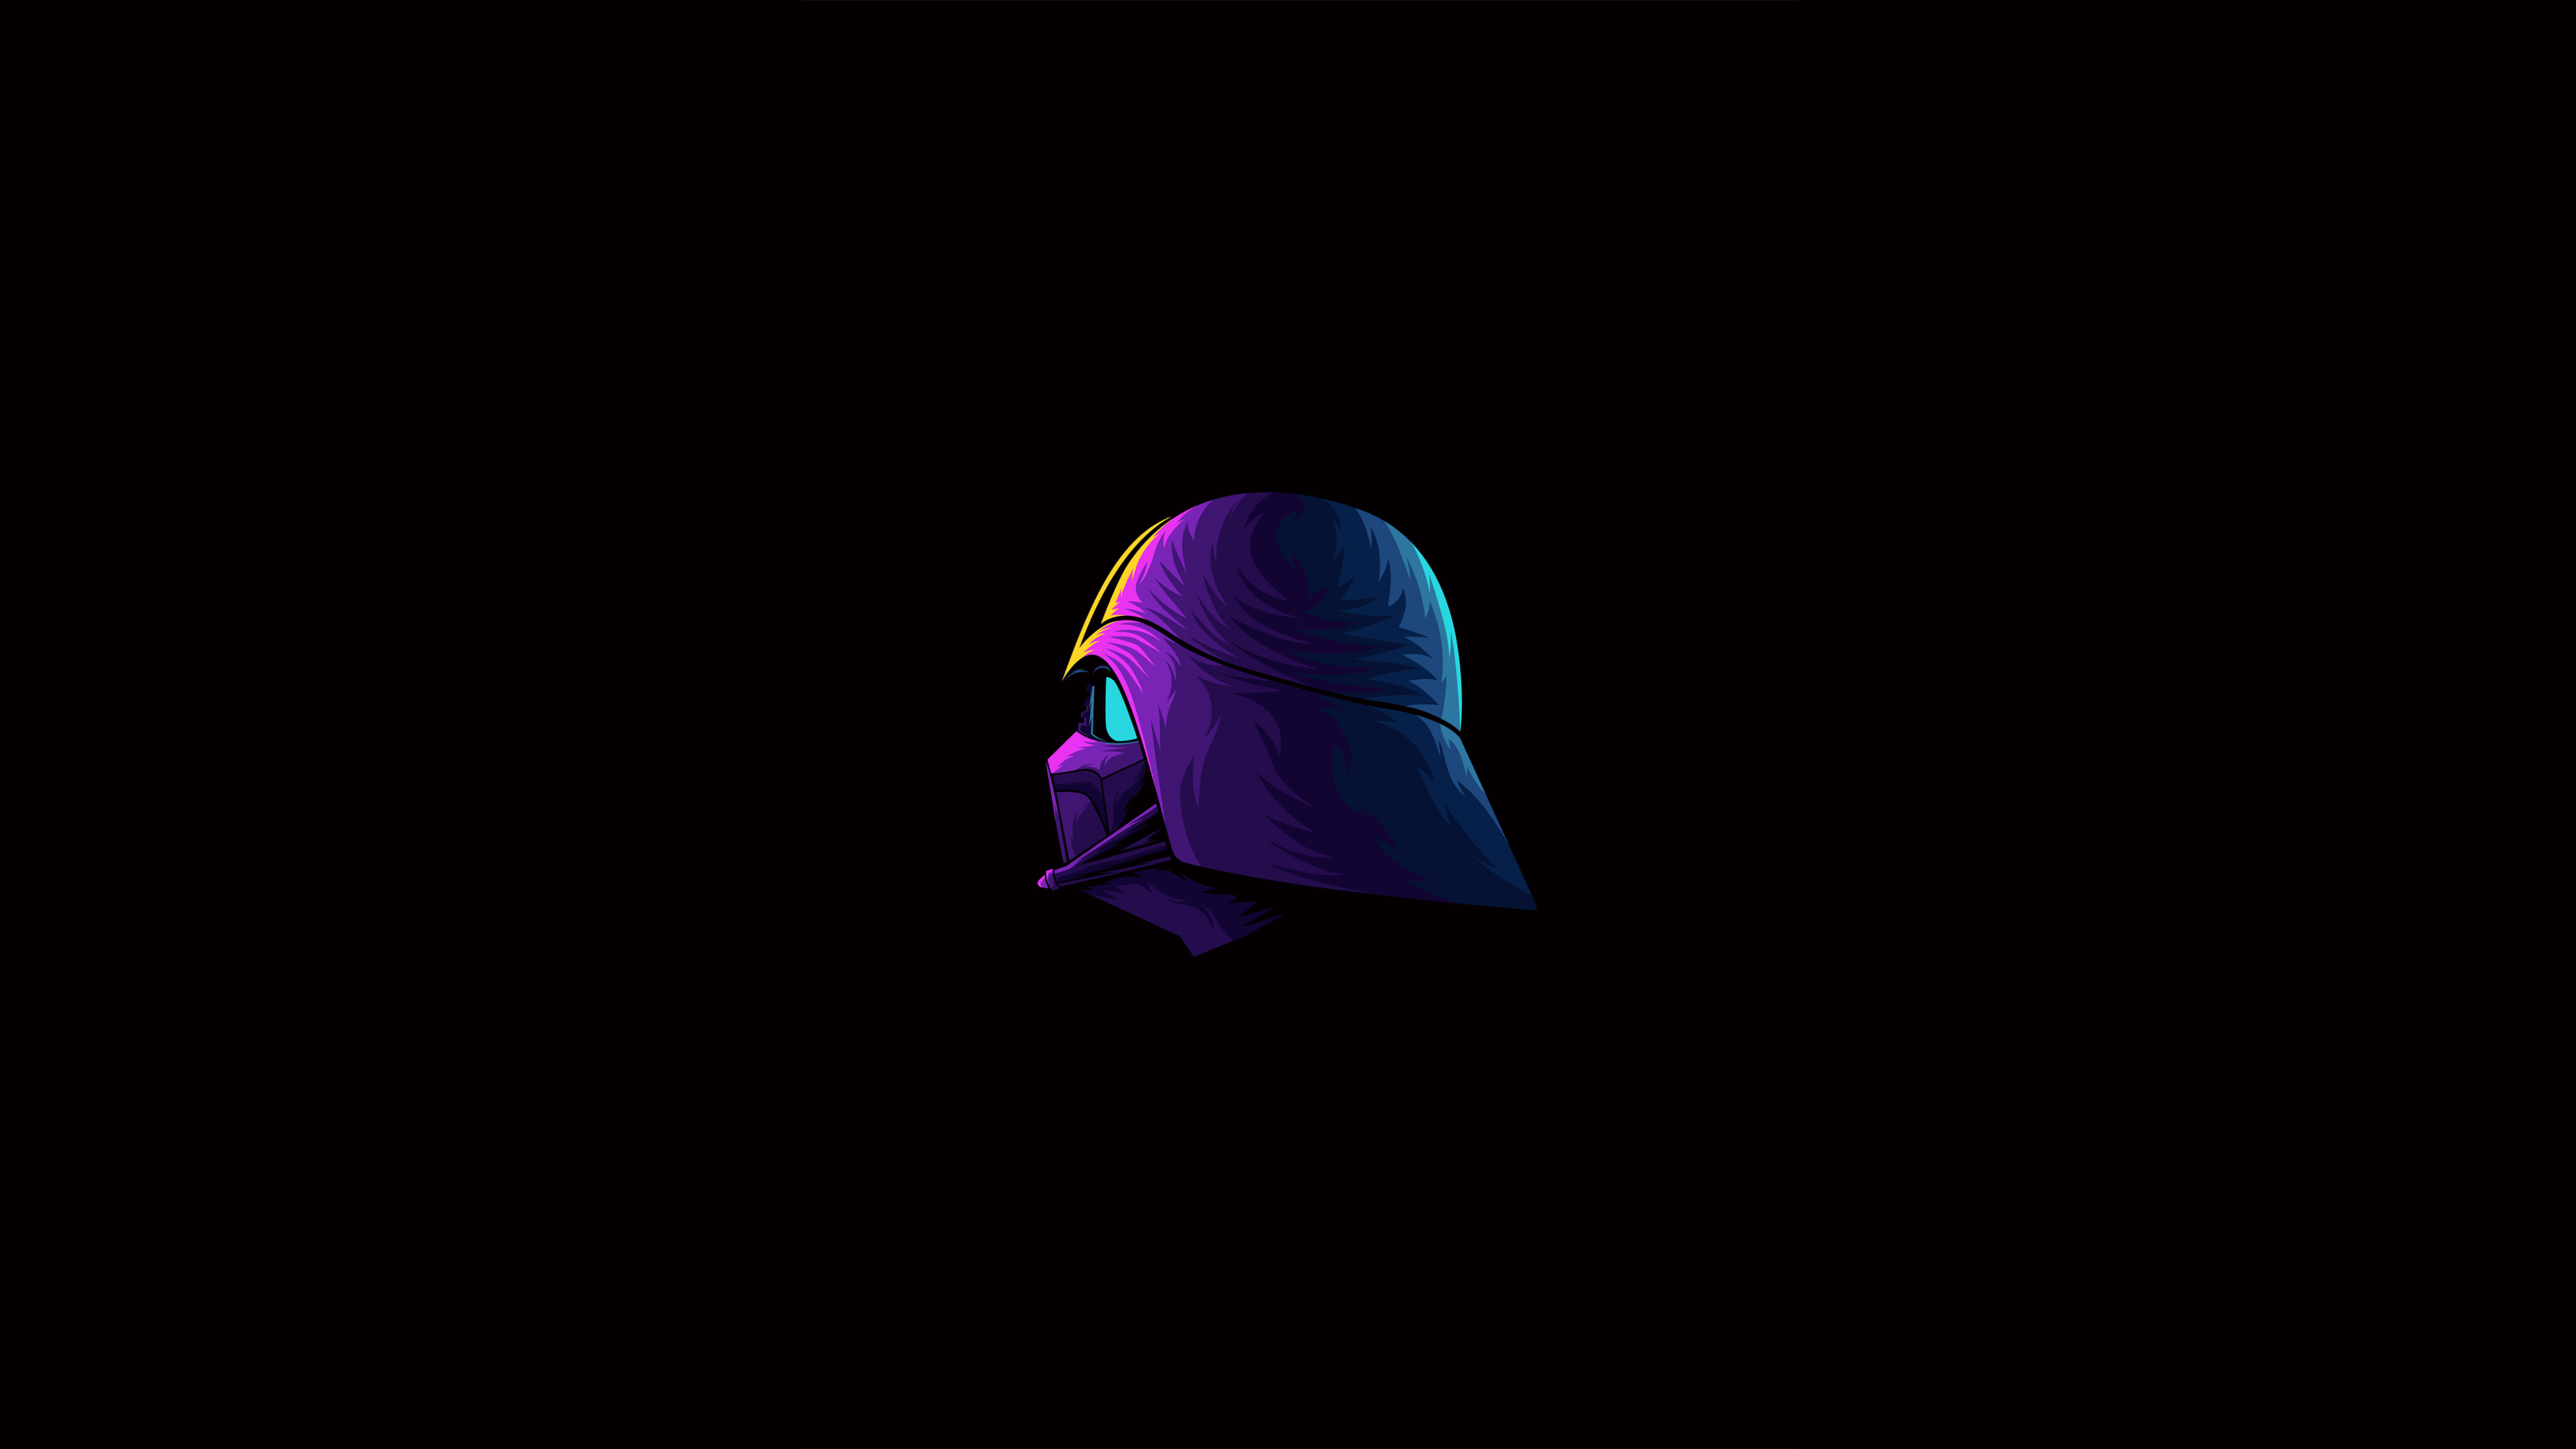 General 3840x2160 George Lucas Vectto digital art artwork illustration simple background minimalism black colorful fictional fictional character Darth Vader Star Wars